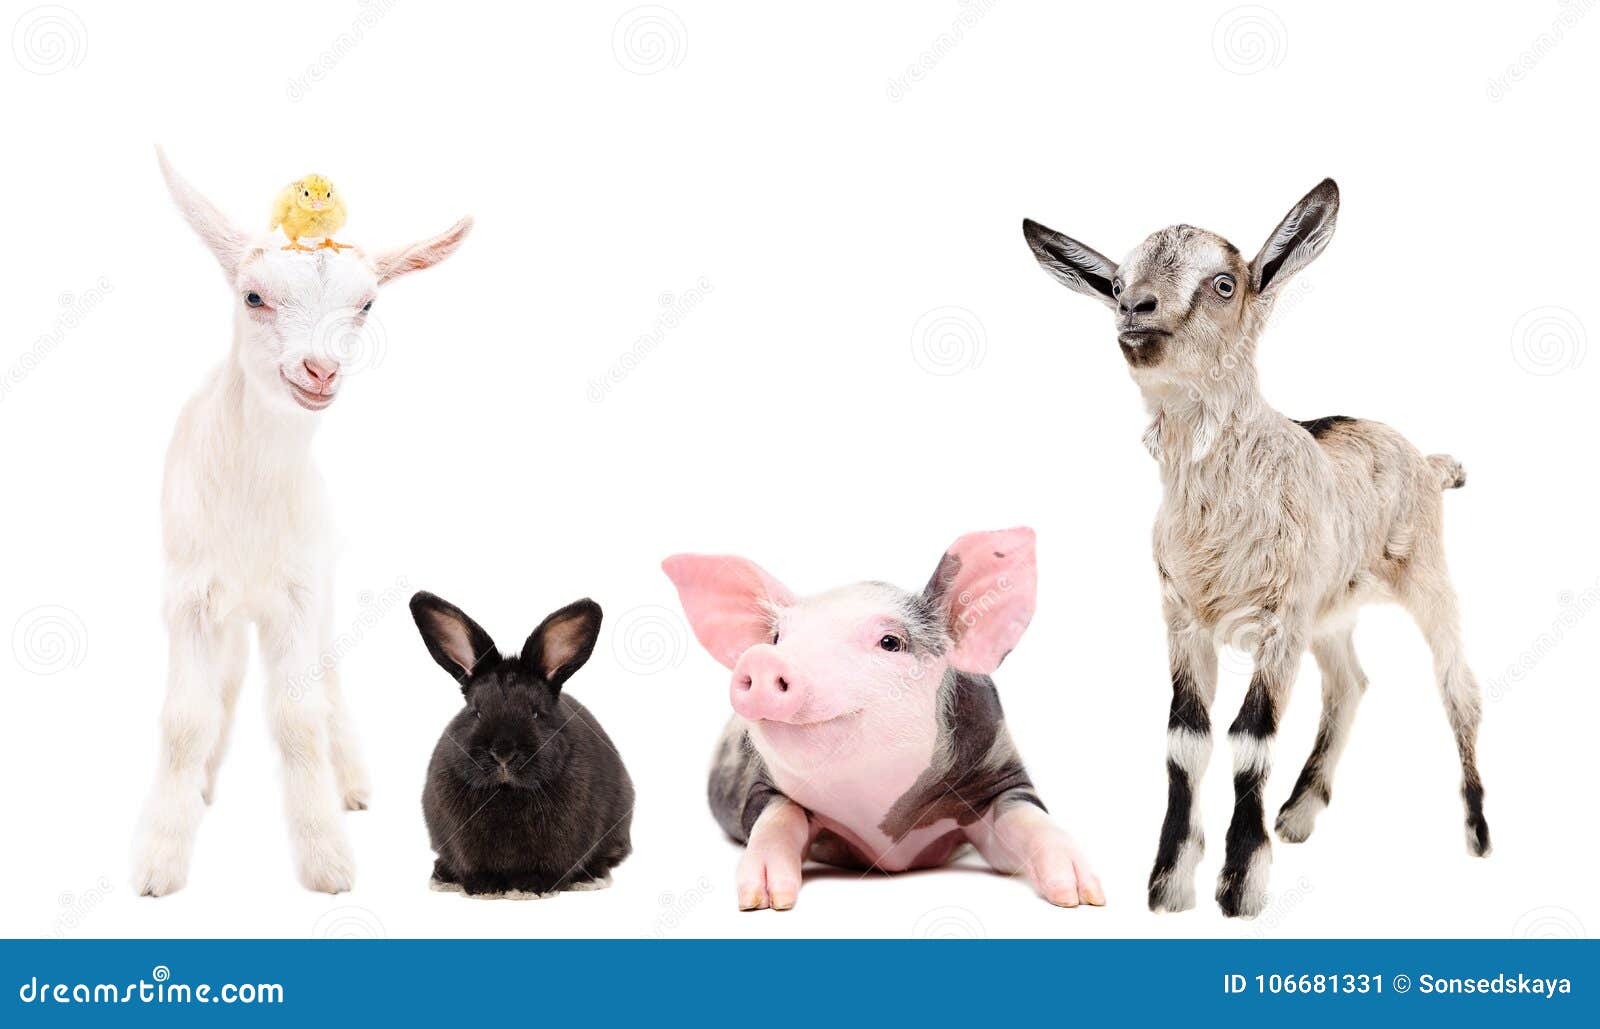 22,883 Funny Farm Animals Stock Photos - Free & Royalty-Free Stock Photos  from Dreamstime